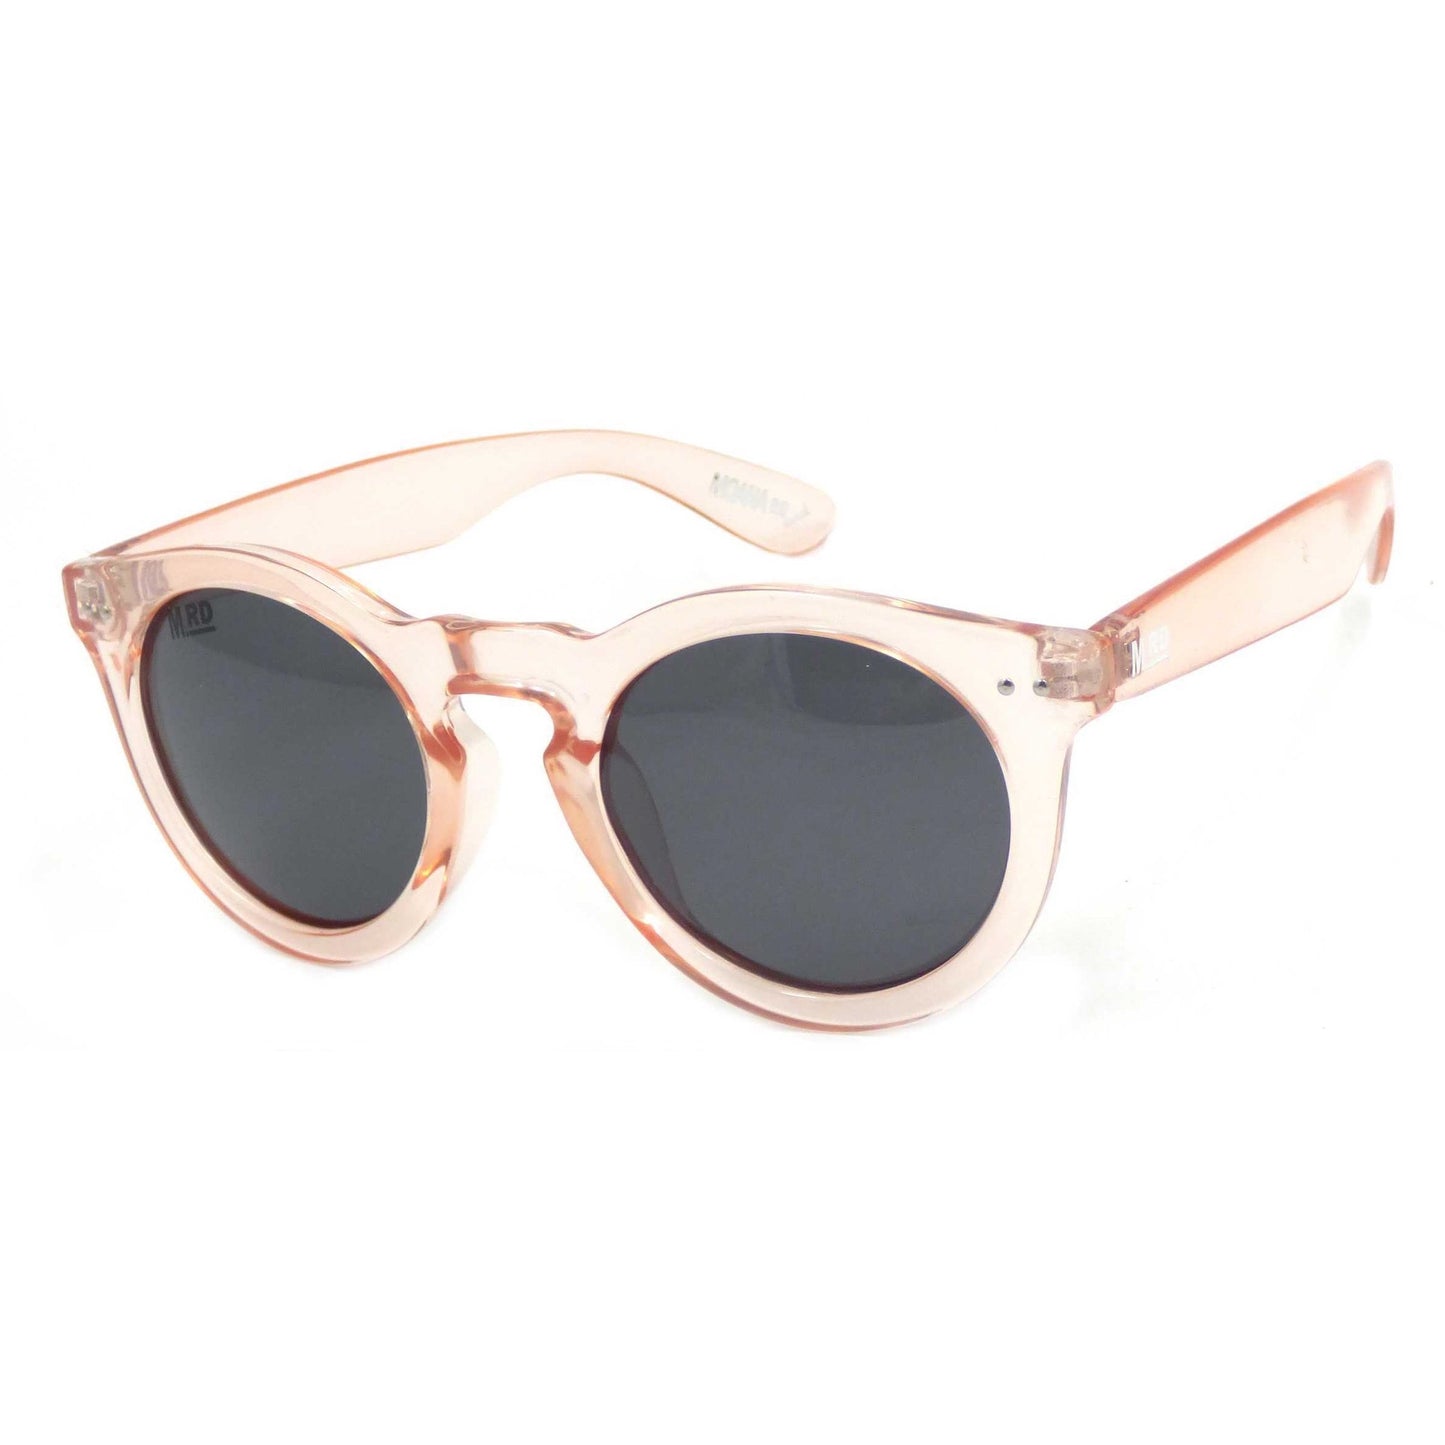 Moana Road Grace Kelly Clear Pink Sunglasses